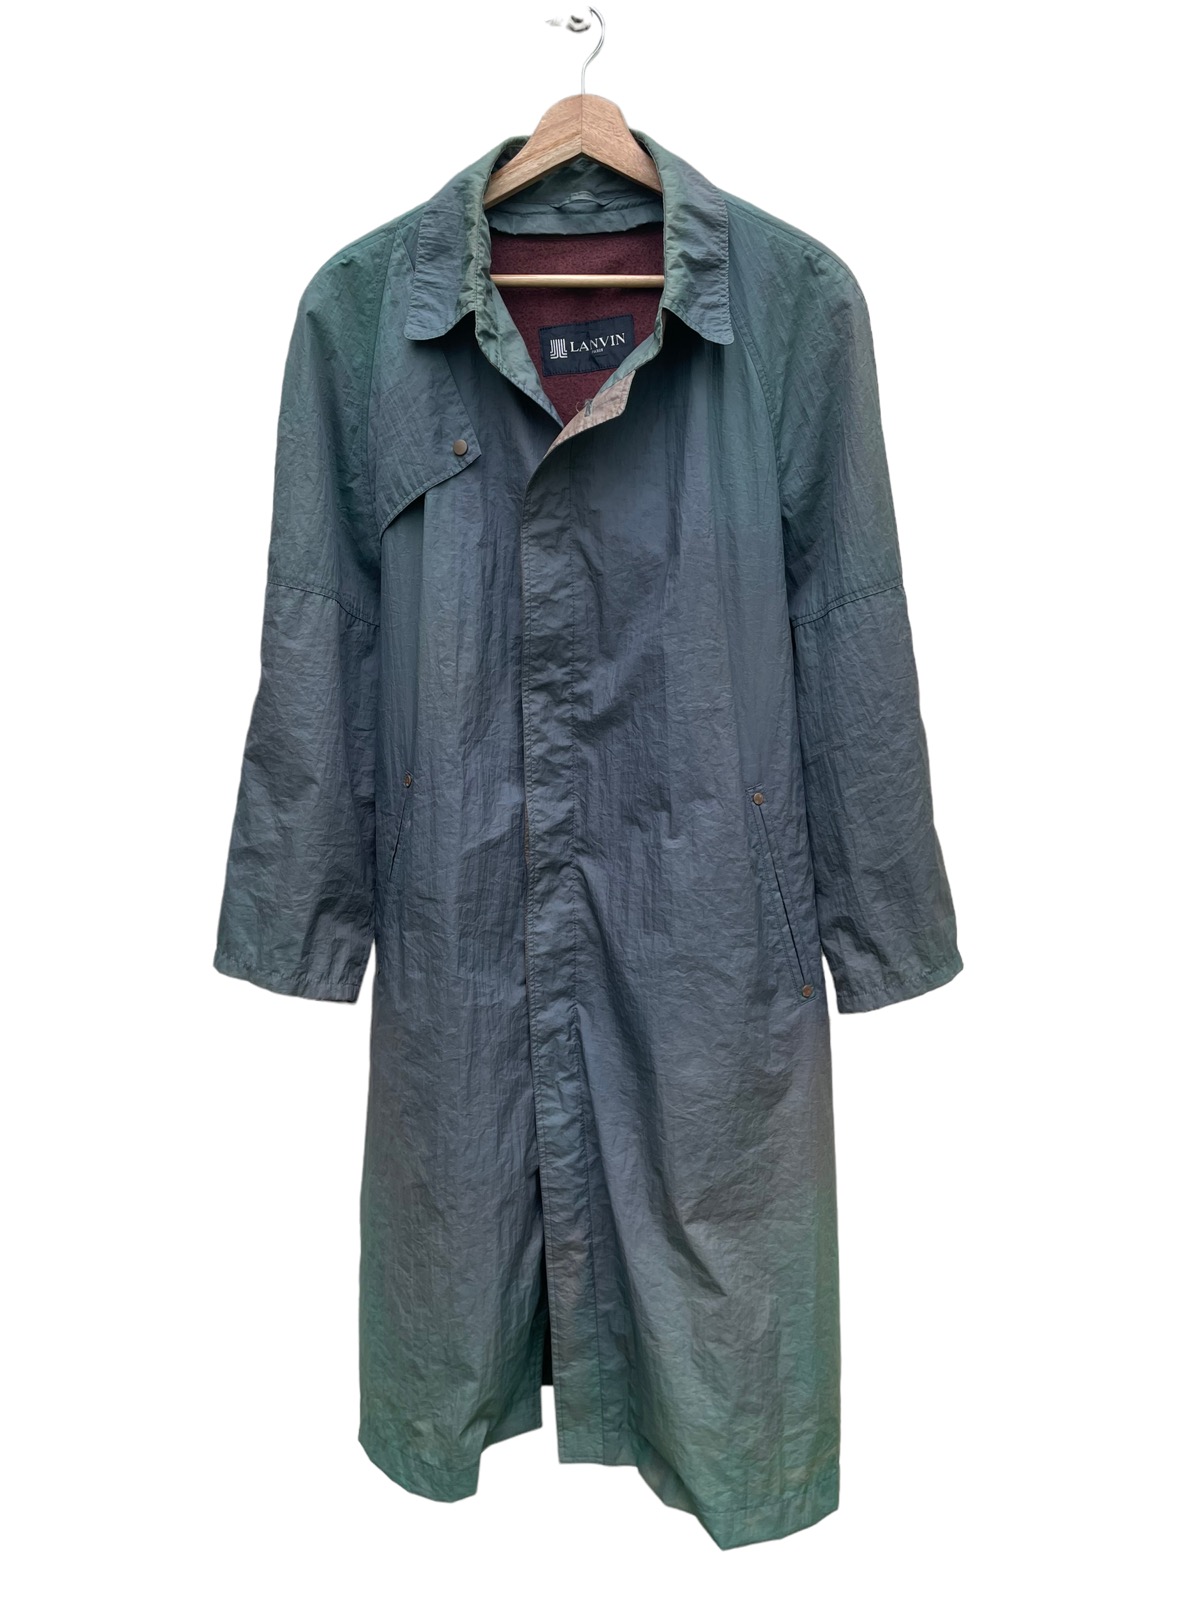 💥 LANVIN PARIS Trench Coat Long Coat Jacket - 2